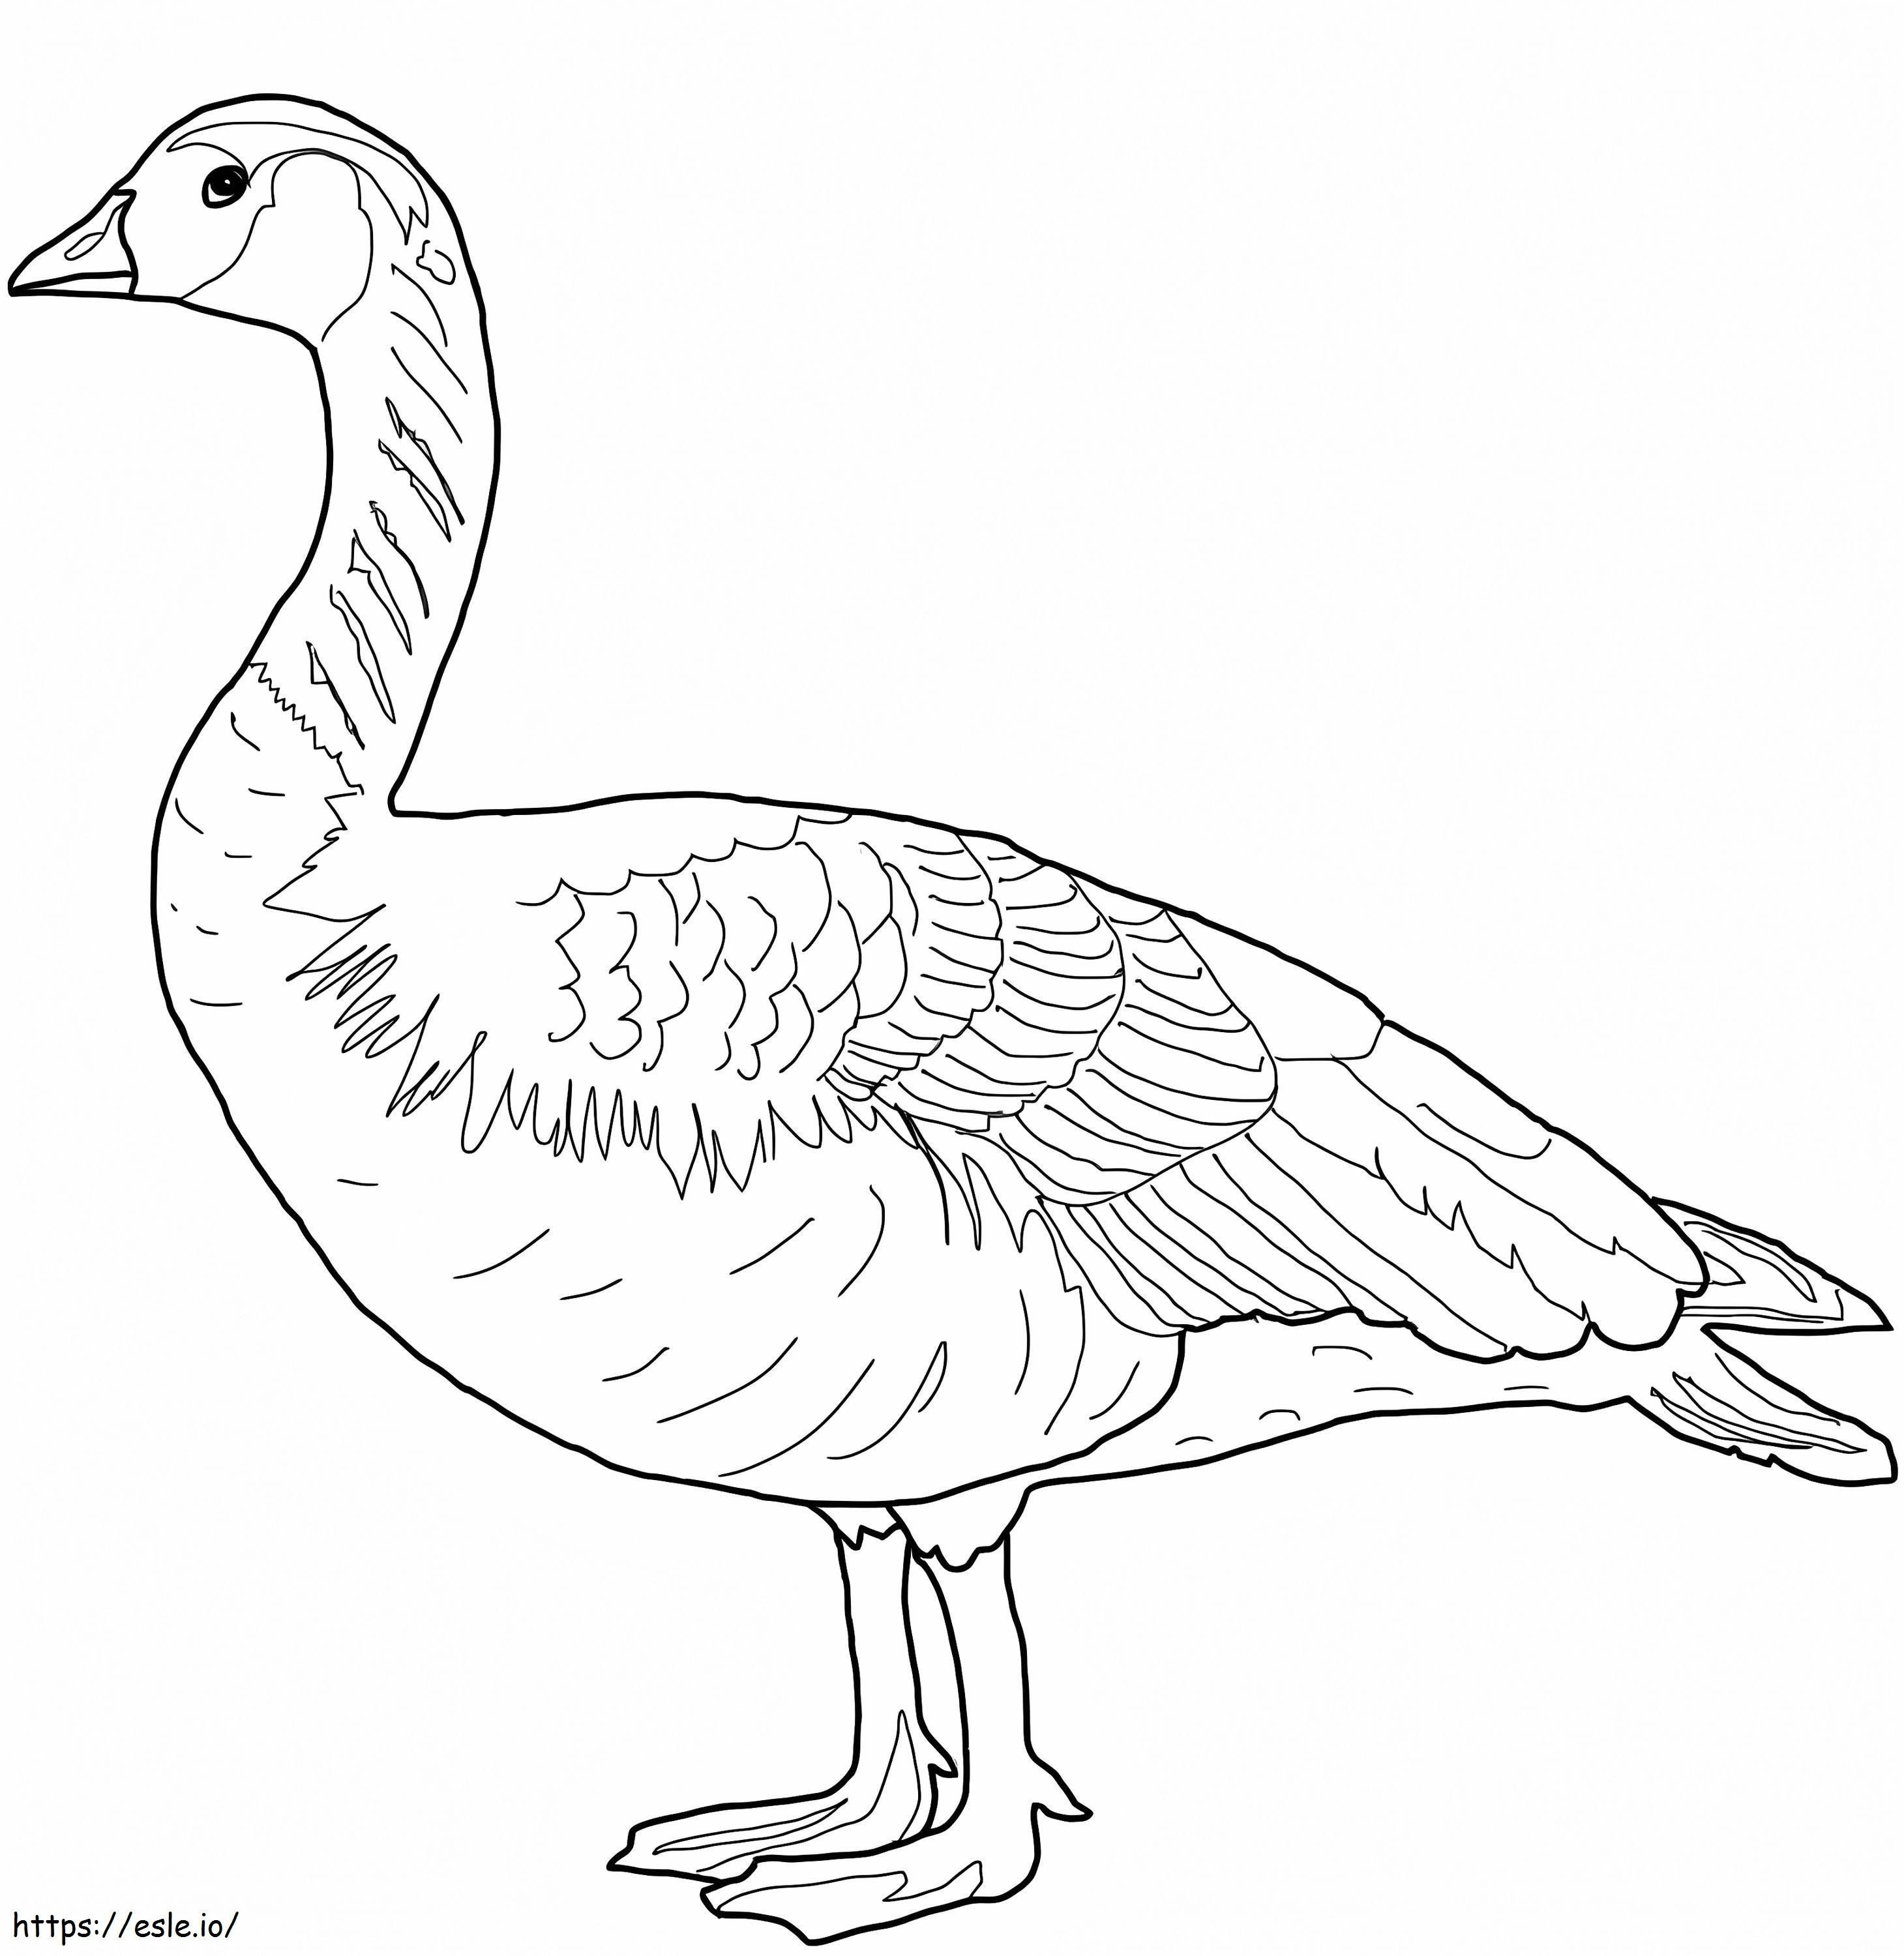 Canada Wild Goose coloring page